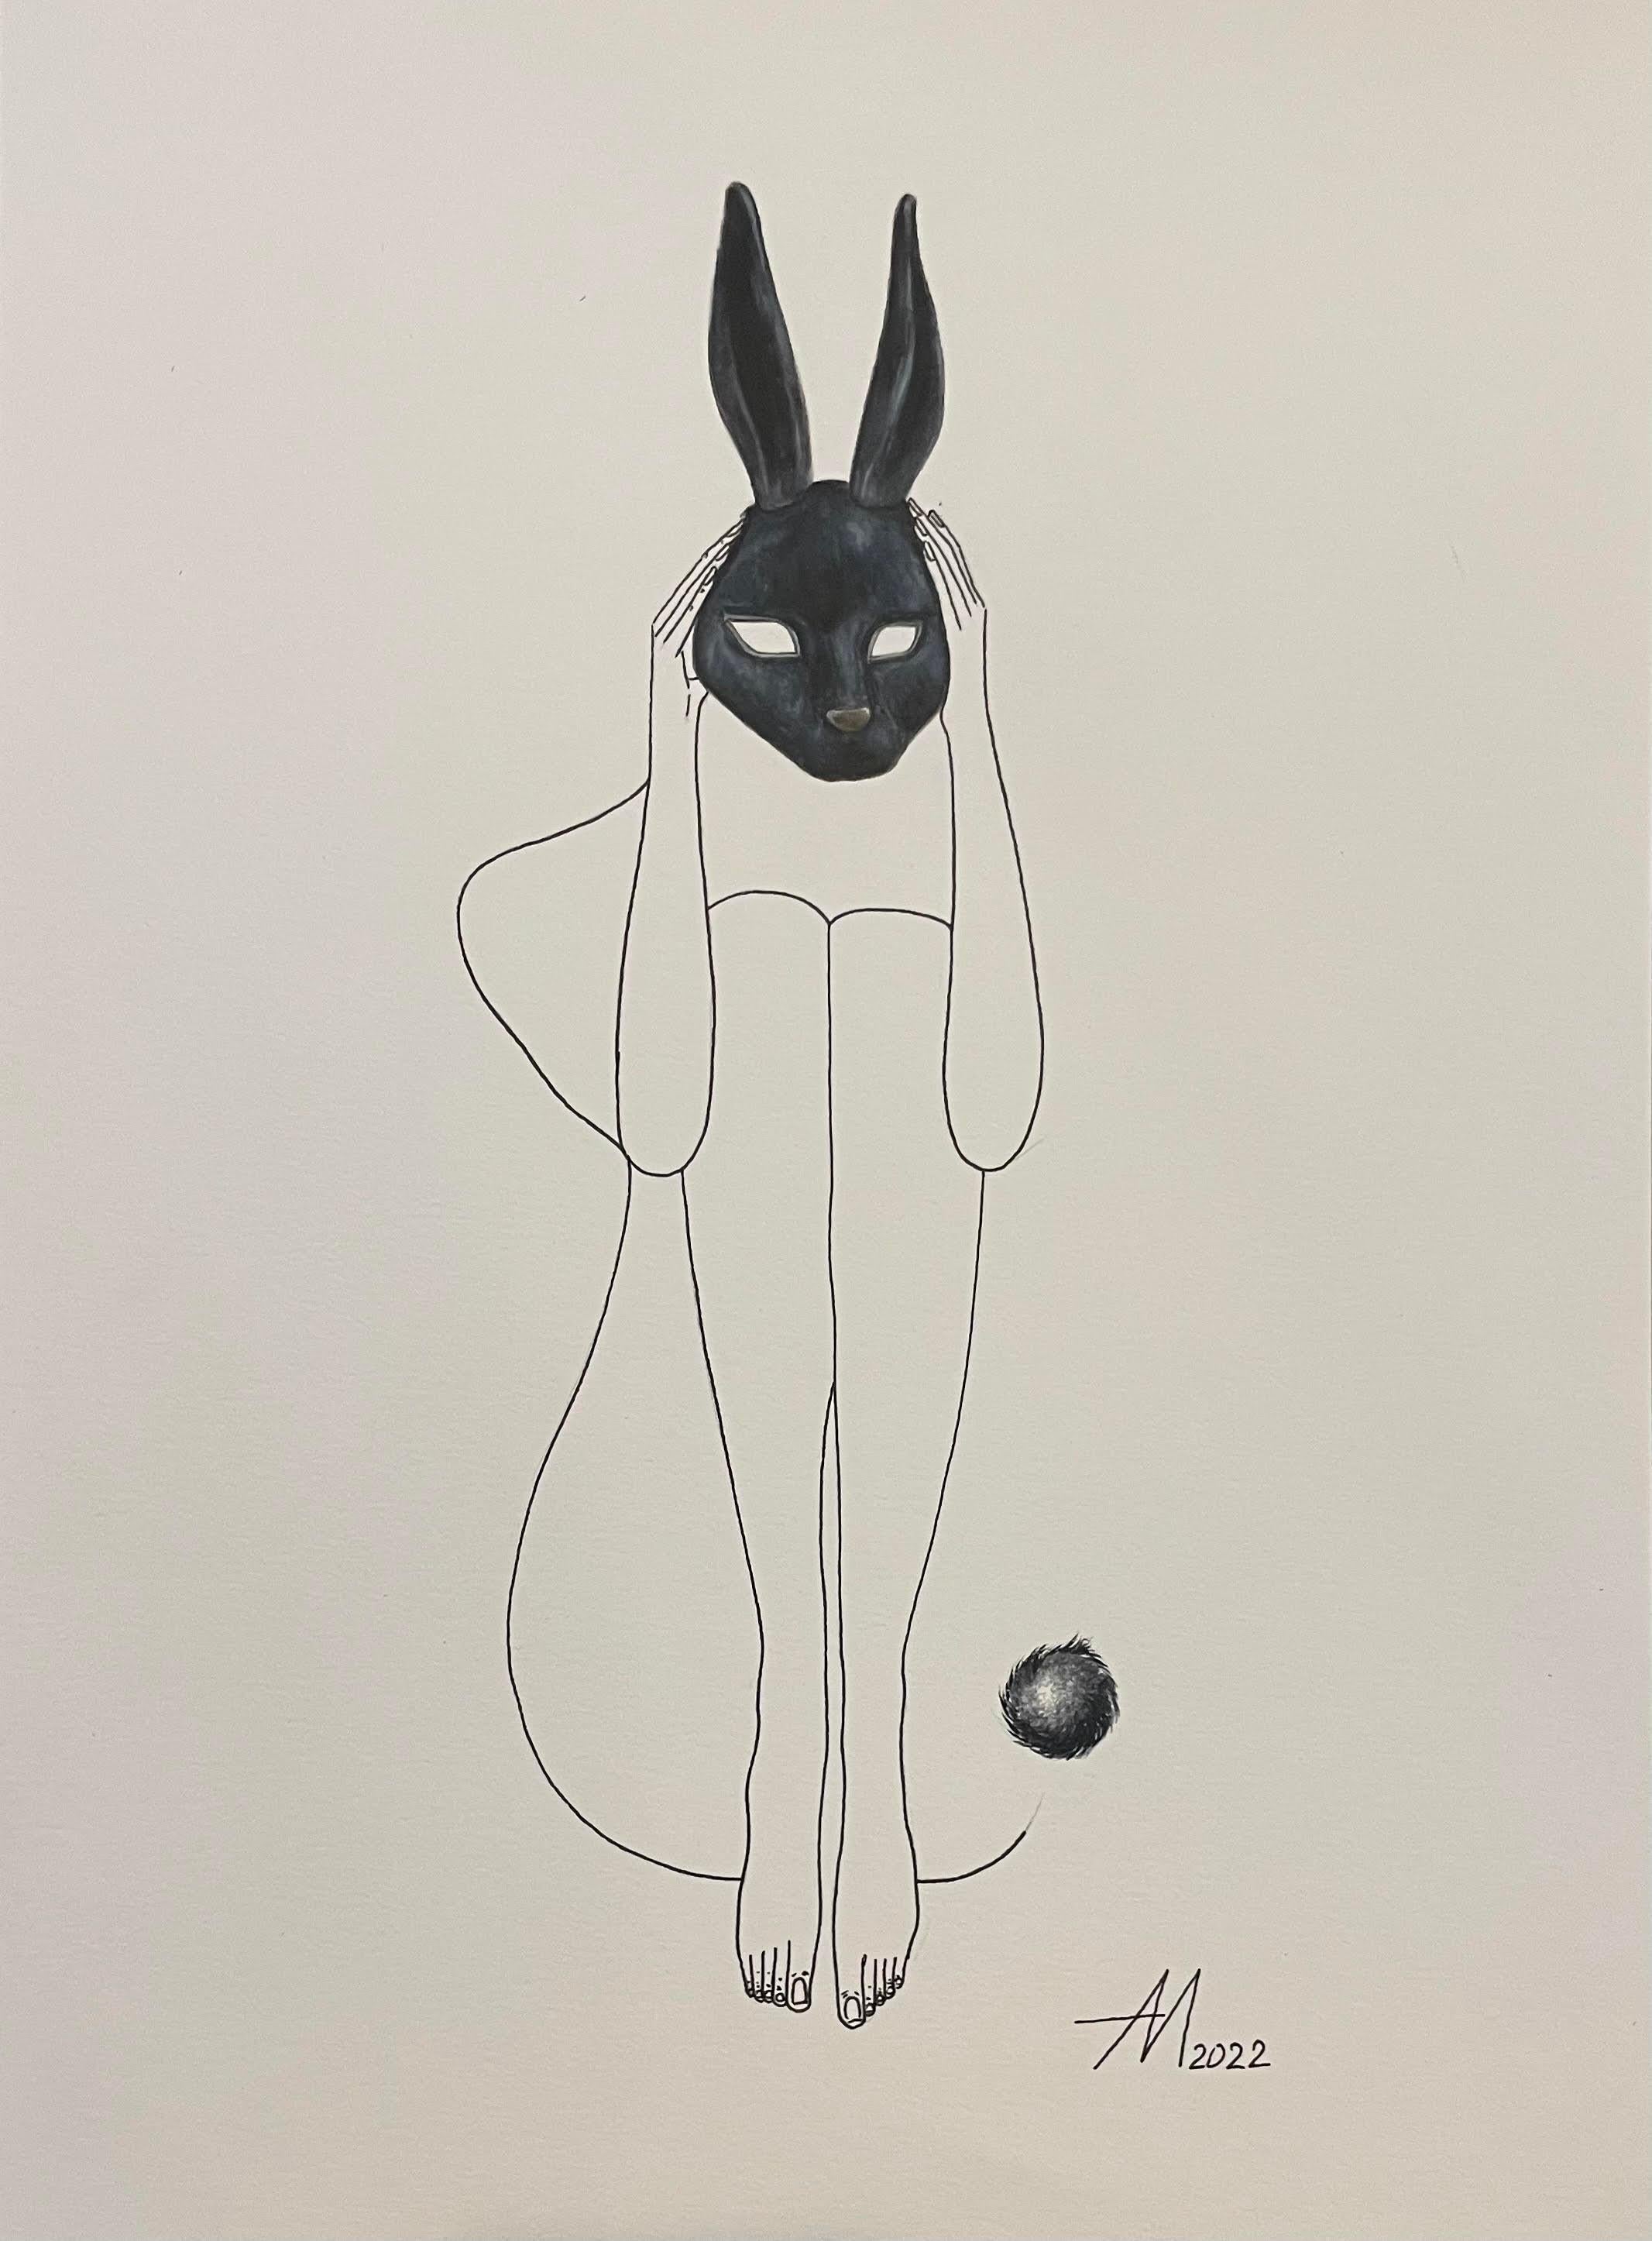 Follow the Black rabbit - line drawing woman figure 